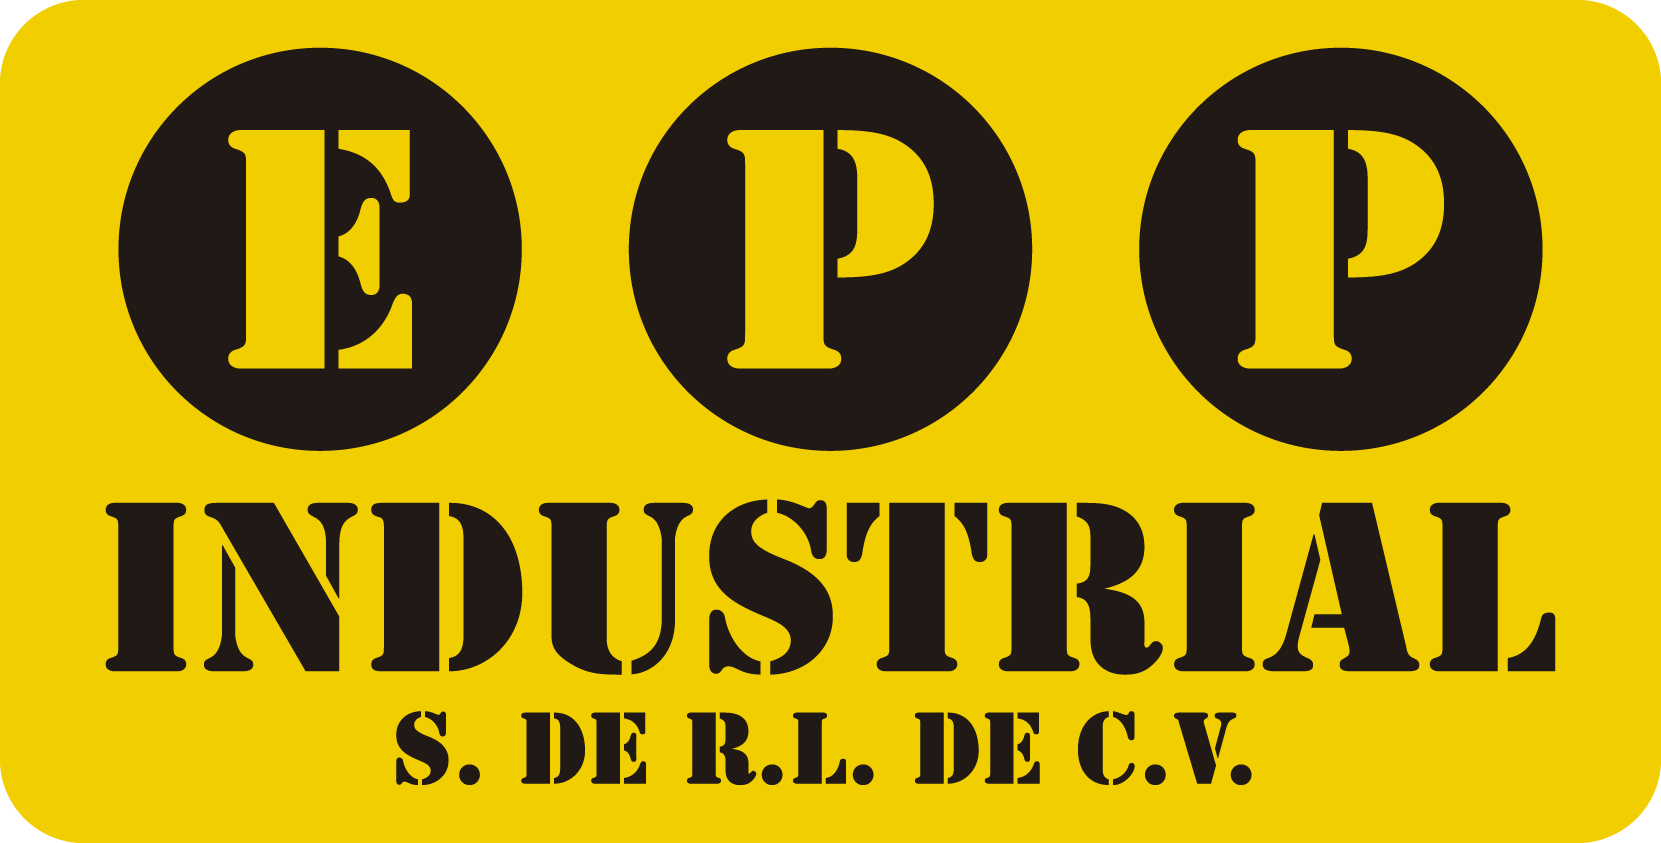 EPP Industrial – San Luis Potosí